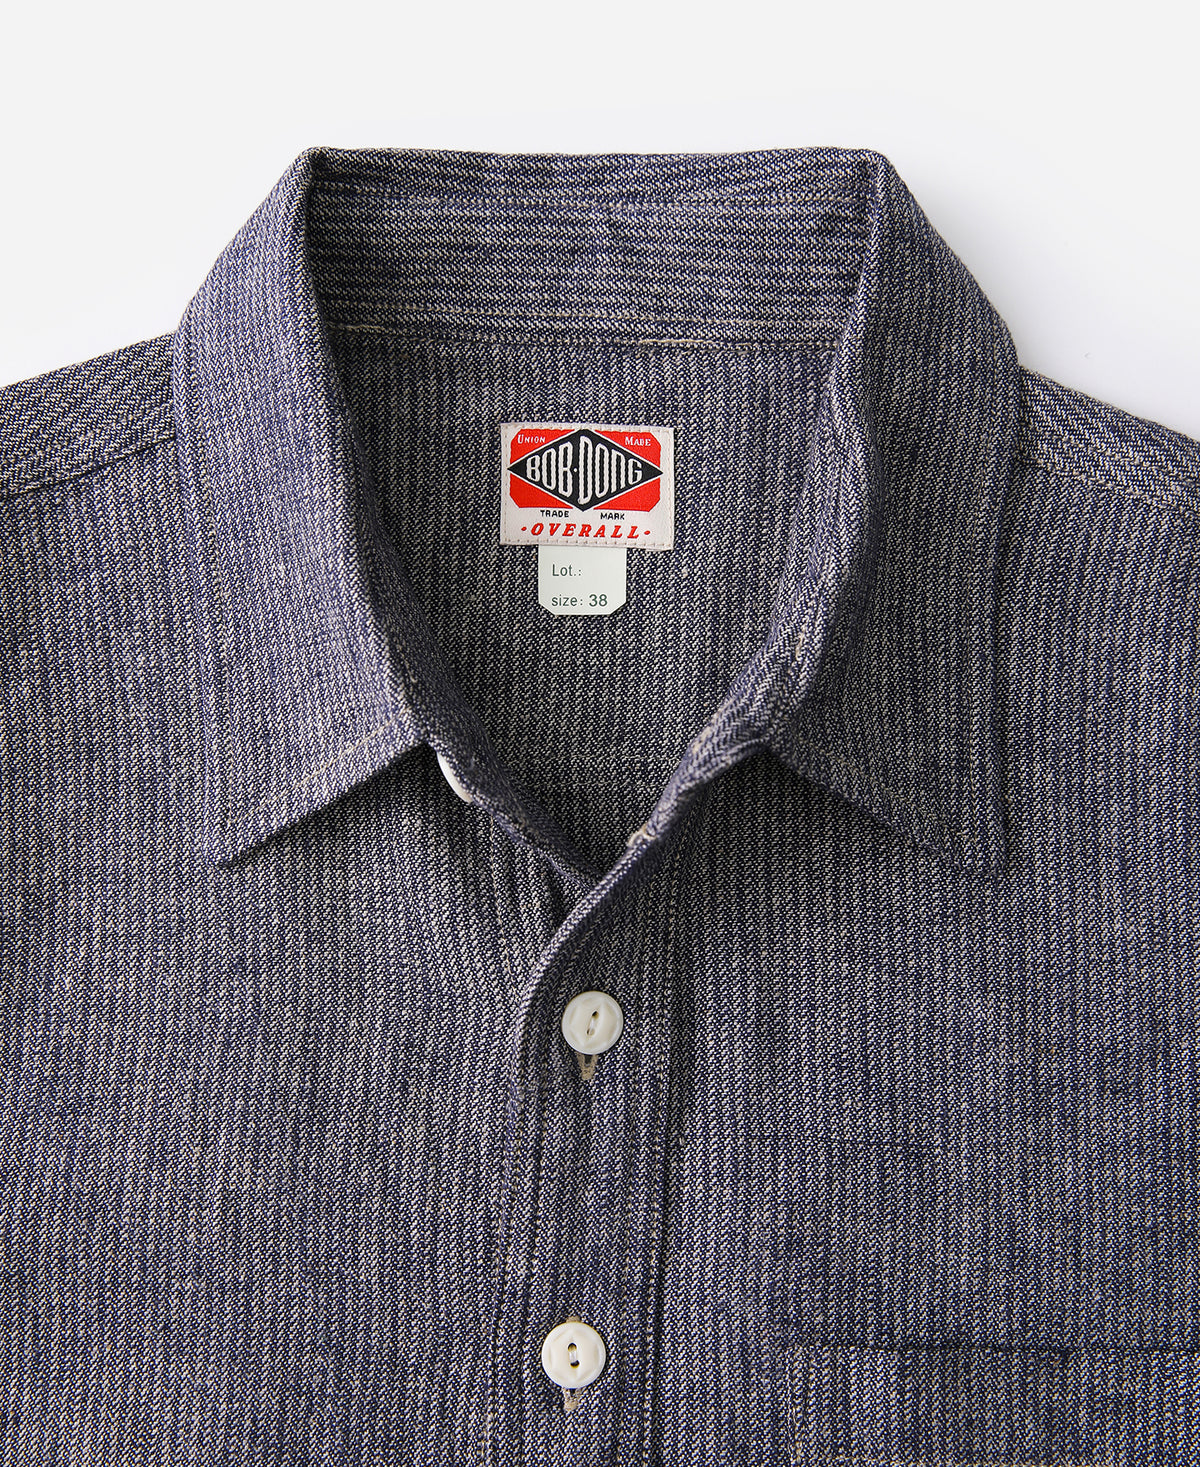 Herringbone Cotton and Linen-Blend Short Sleeve Workshirt